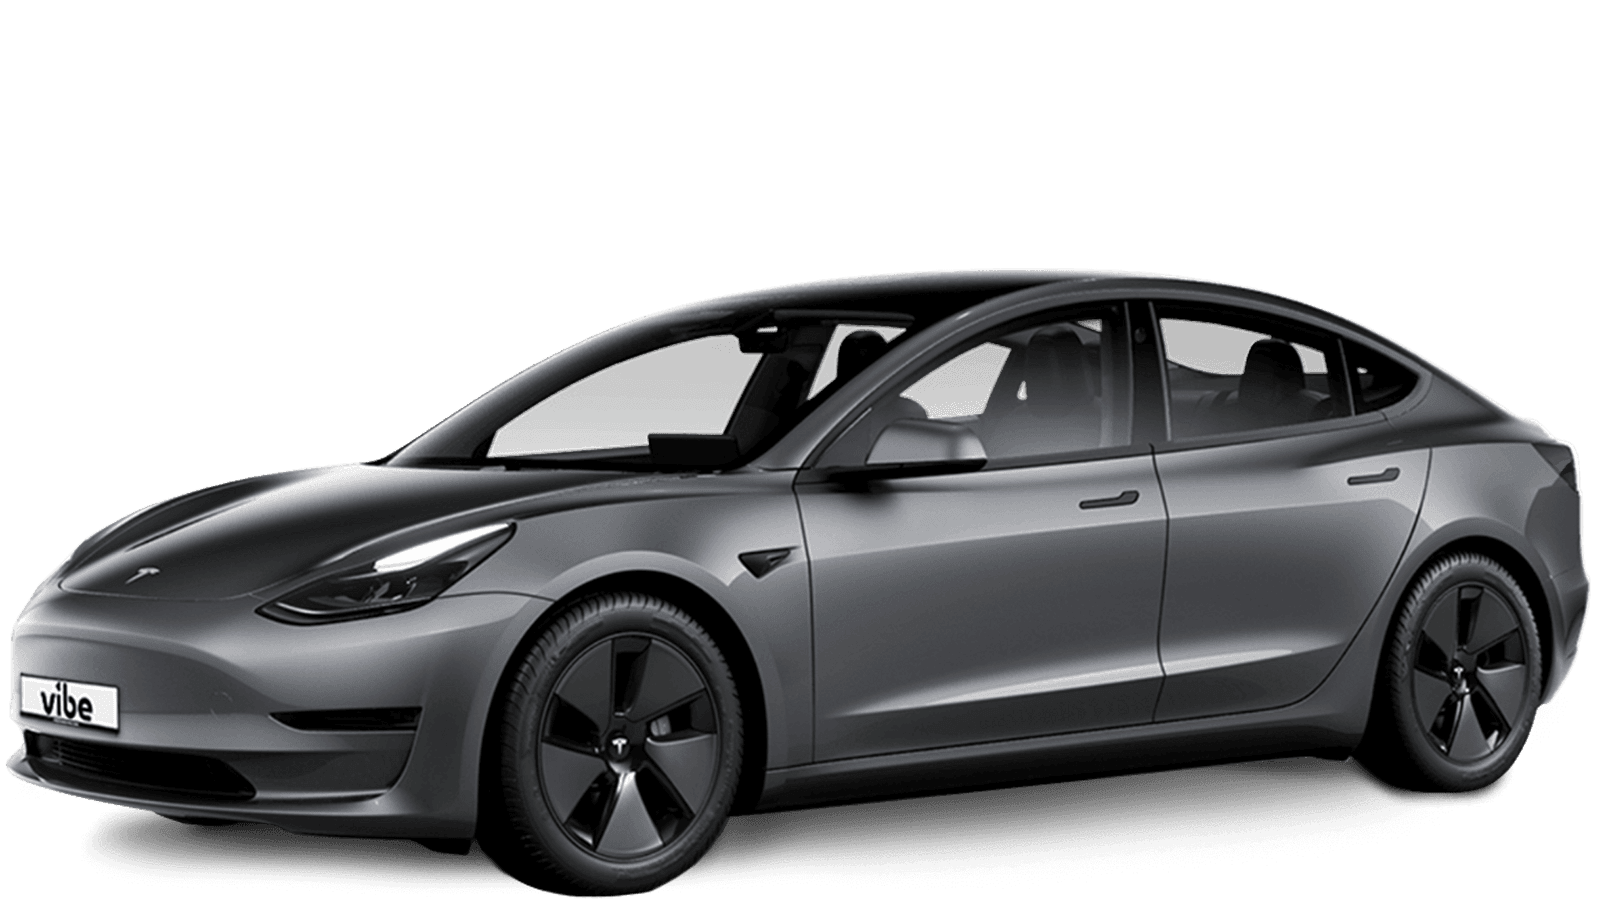 Automodell-Foto: Tesla Model 3 Silber von vibe